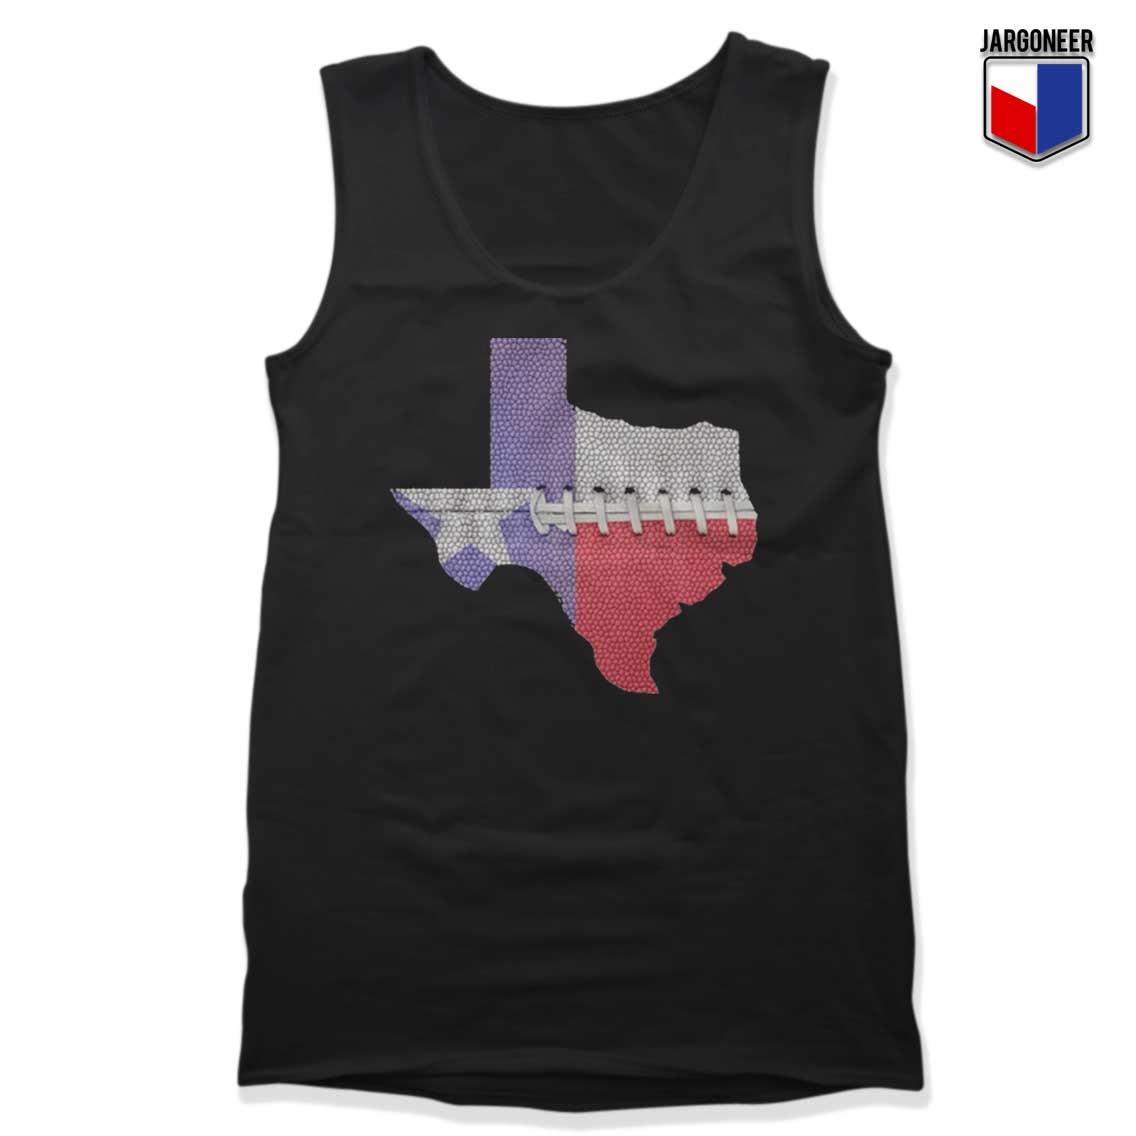 Texas High School Football Tank Top - Shop Unique Graphic Cool Shirt Designs